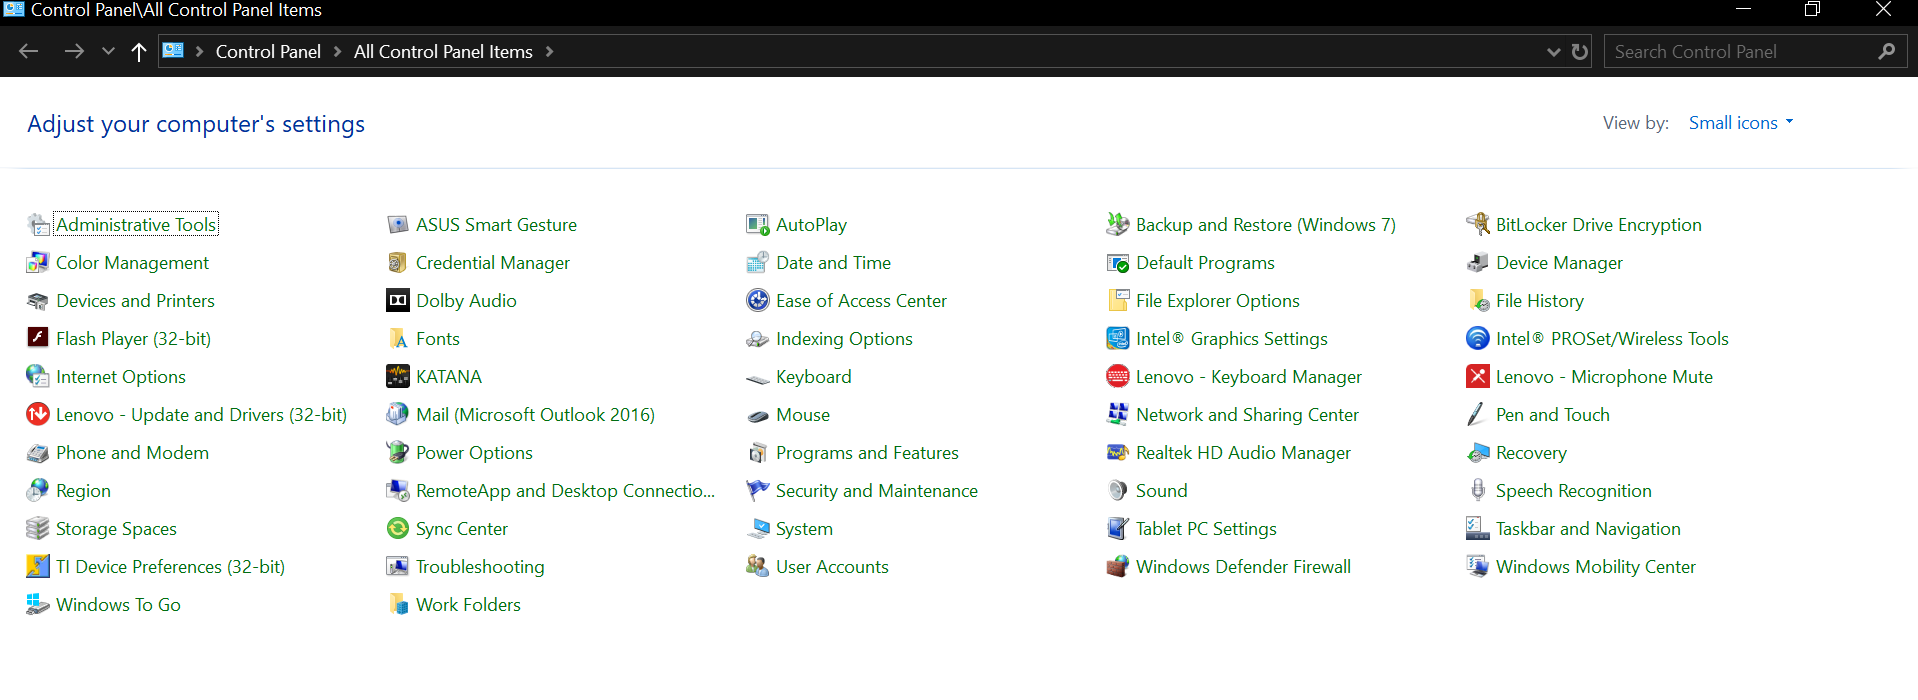 Lenovo keyboard manager windows 10 download blue iris software download